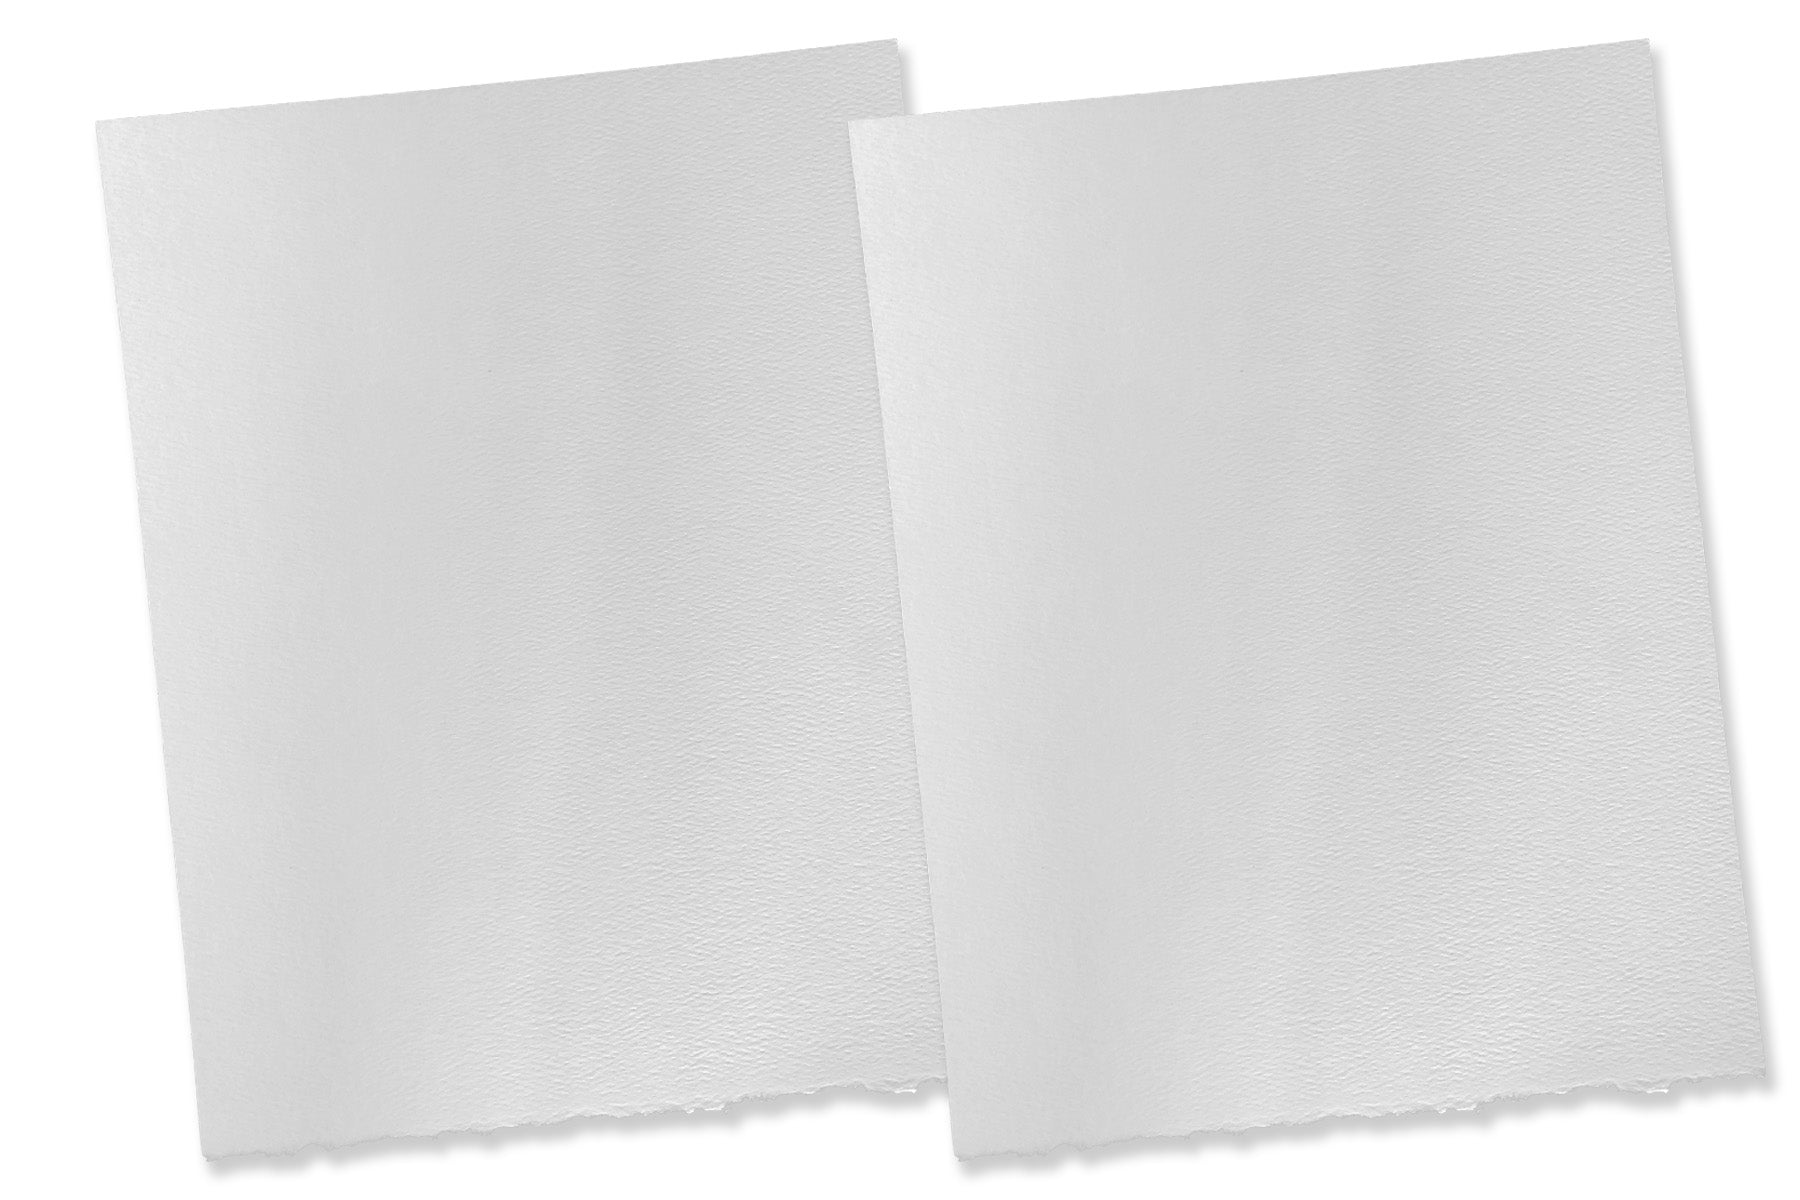 Strathmore Pastelle DECKLE EDGE 80 lb Text Weight Paper 8.5x11 - 50 pk